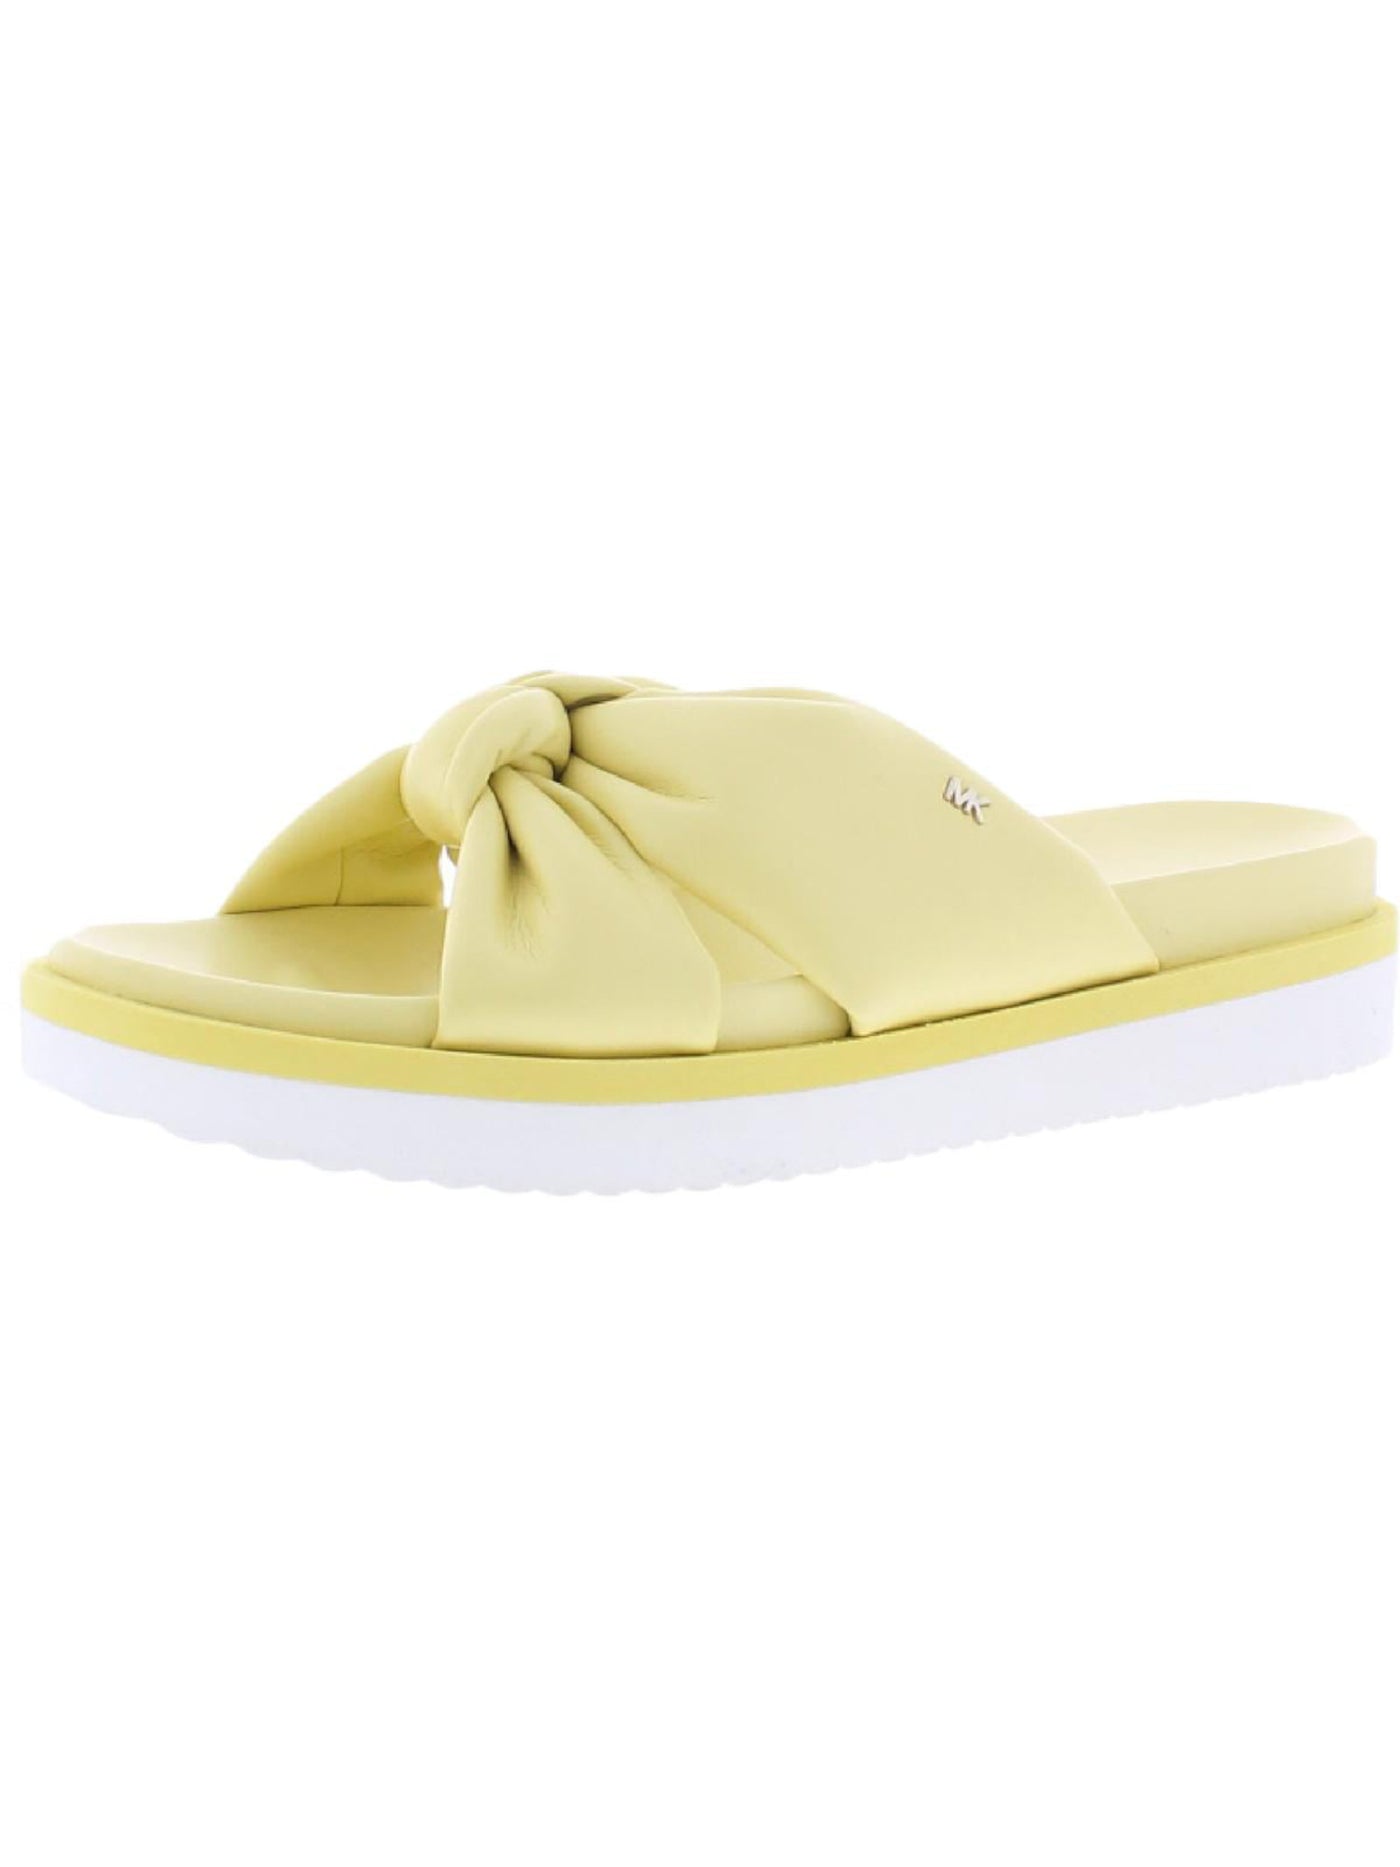 MICHAEL MICHAEL KORS Womens Yellow Knot 1 Platform Comfort Josie Round Toe Wedge Slip On Slide Sandals Shoes 5 M